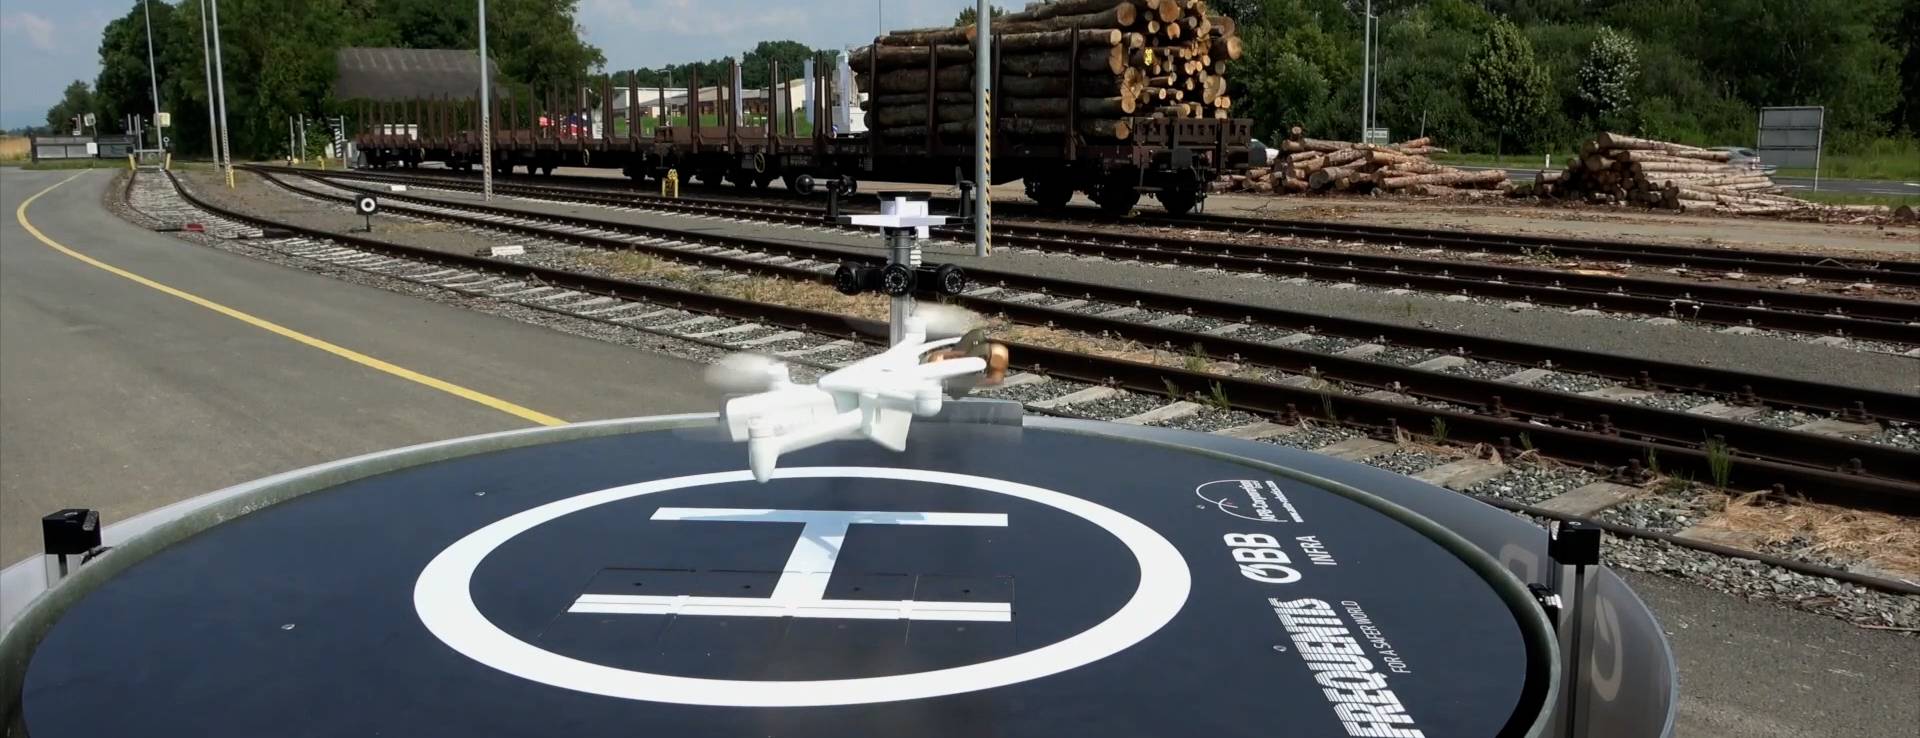 Drohne verlässt Drohnenhangar neben Bahngleisen 